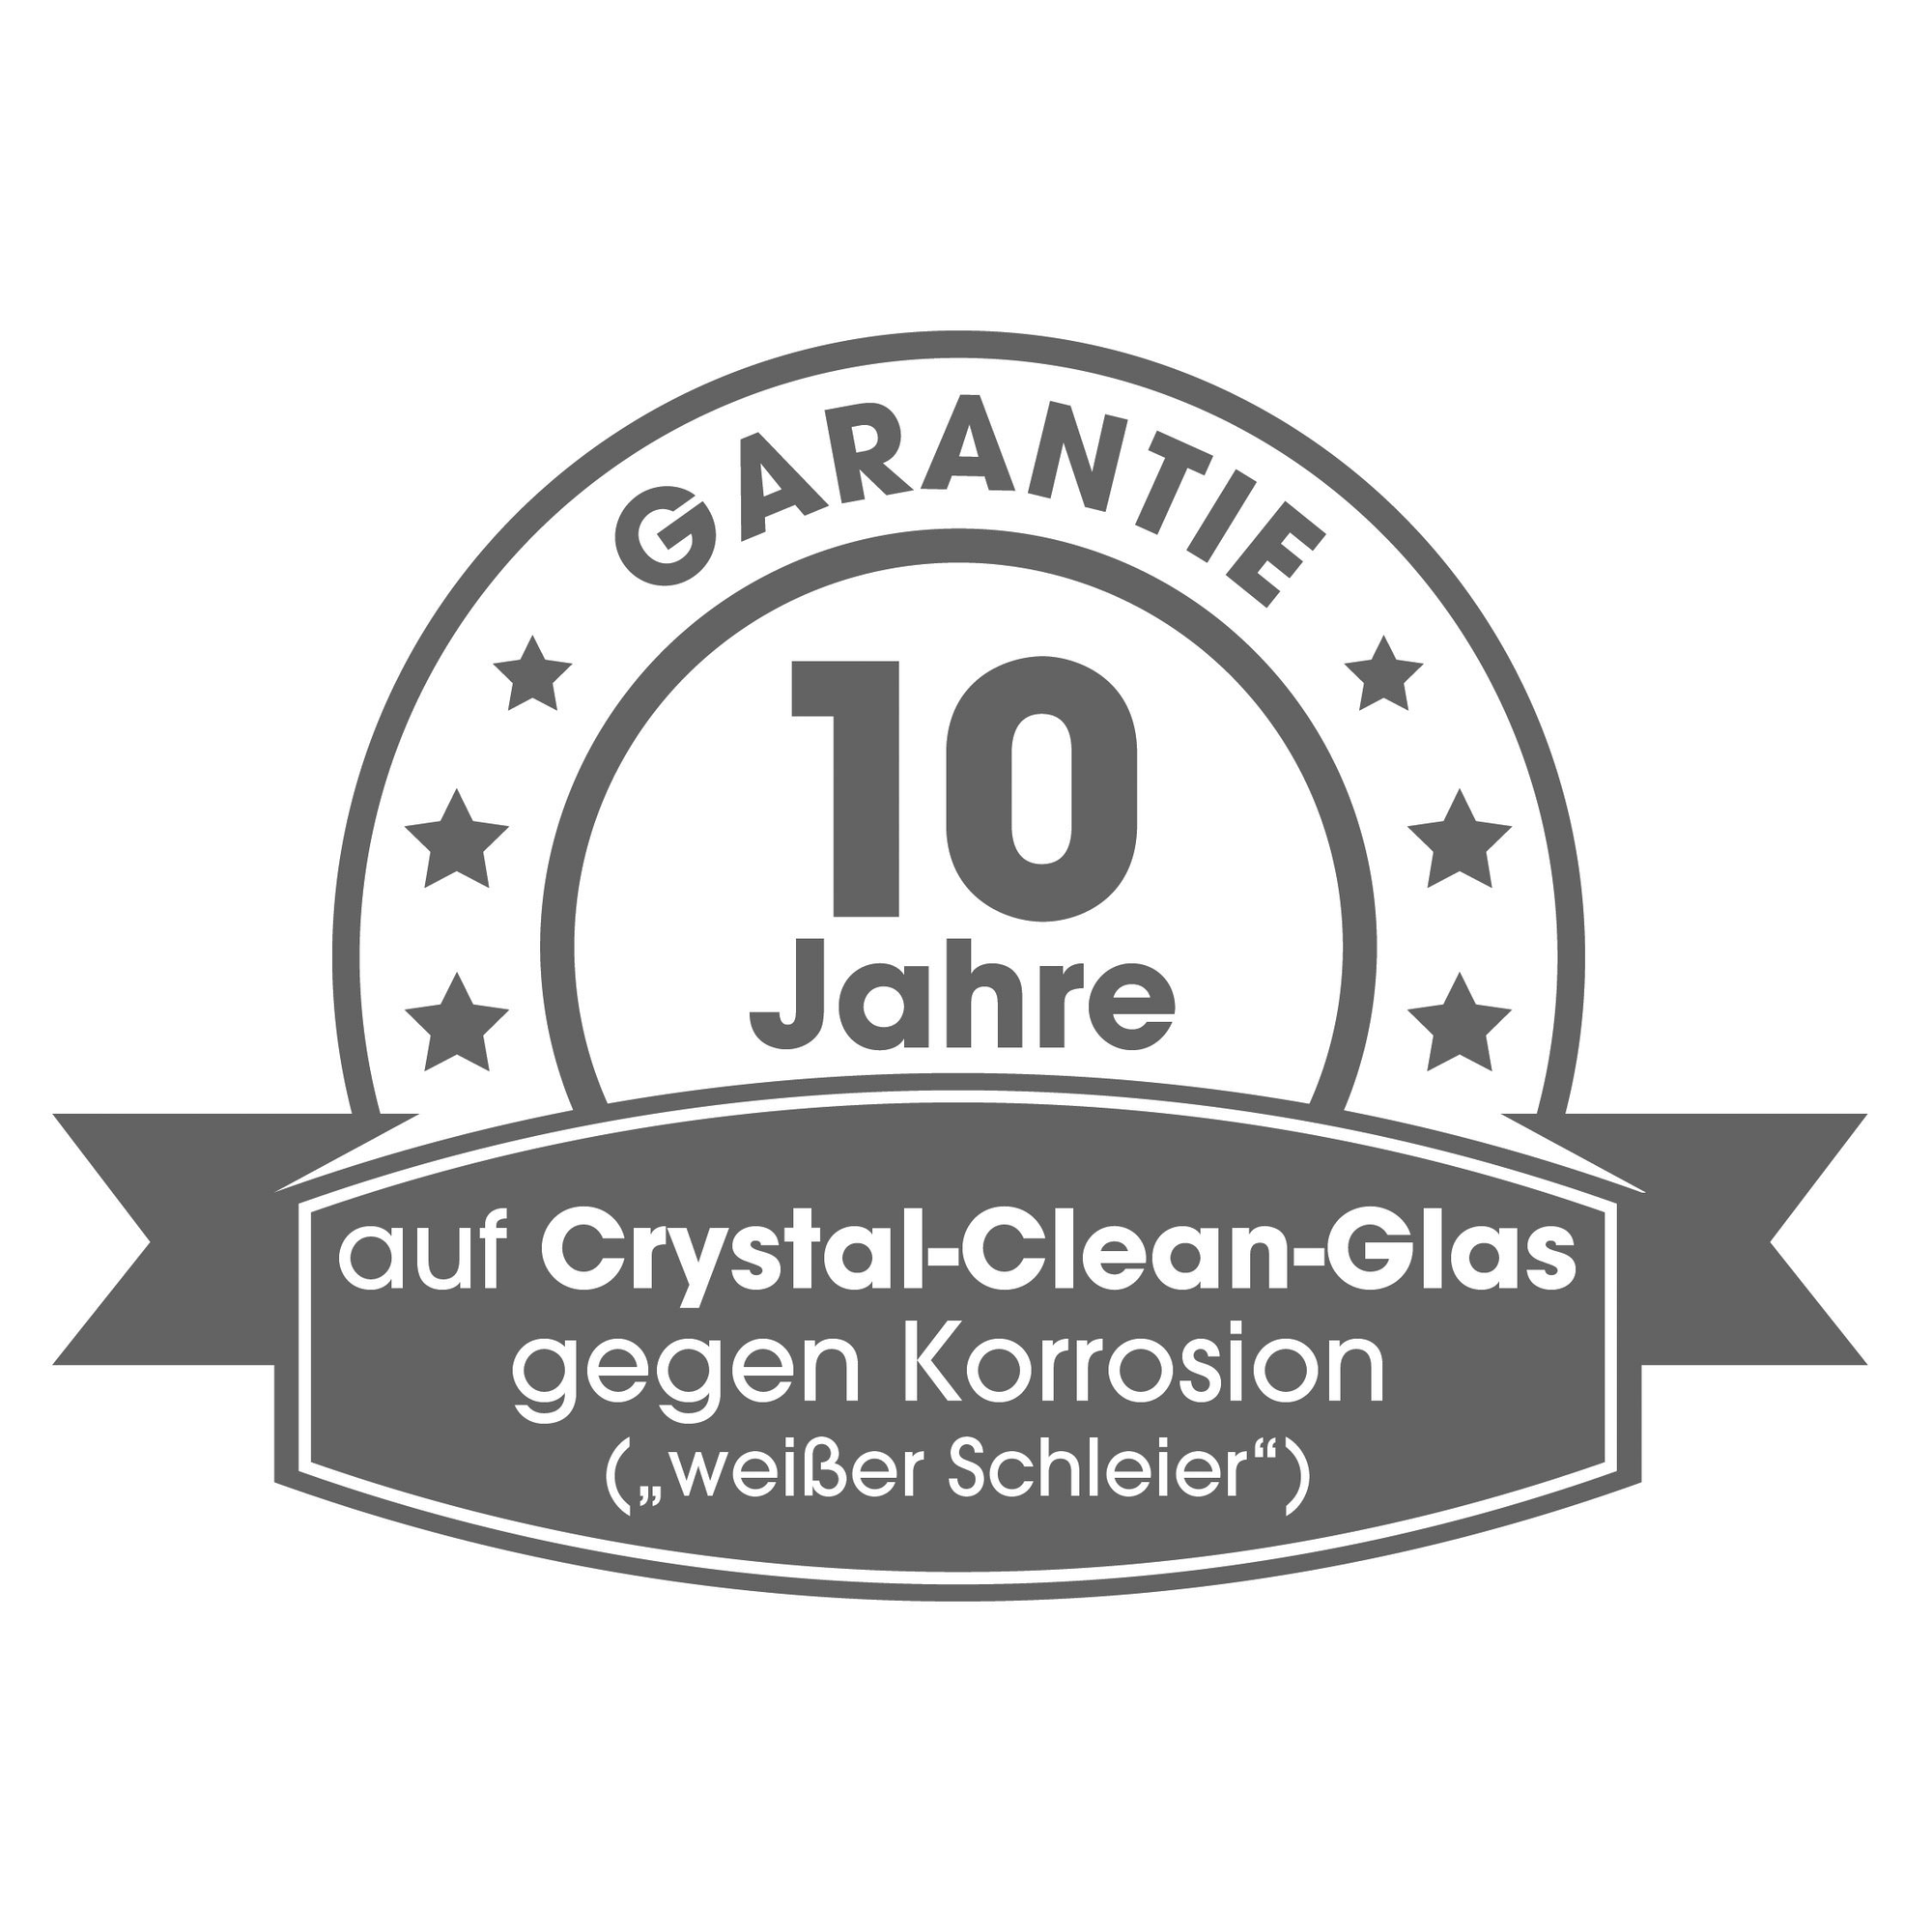 knw_crystal-clean-glas-logo_sw.jpg